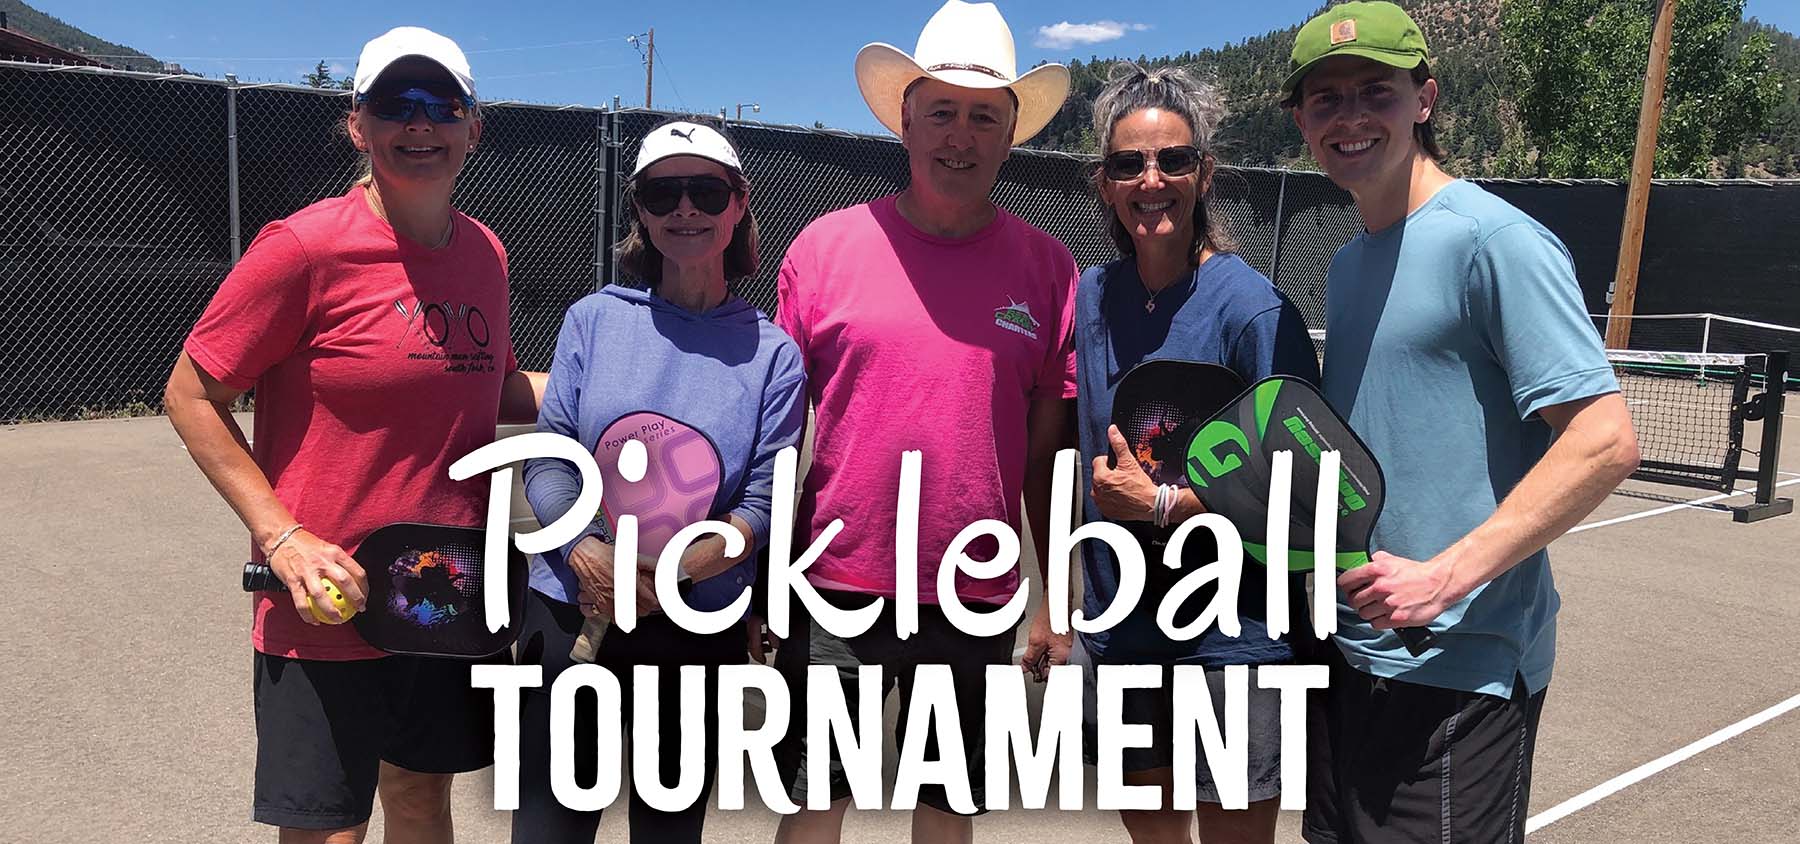 South Fork Pickleball Tournament